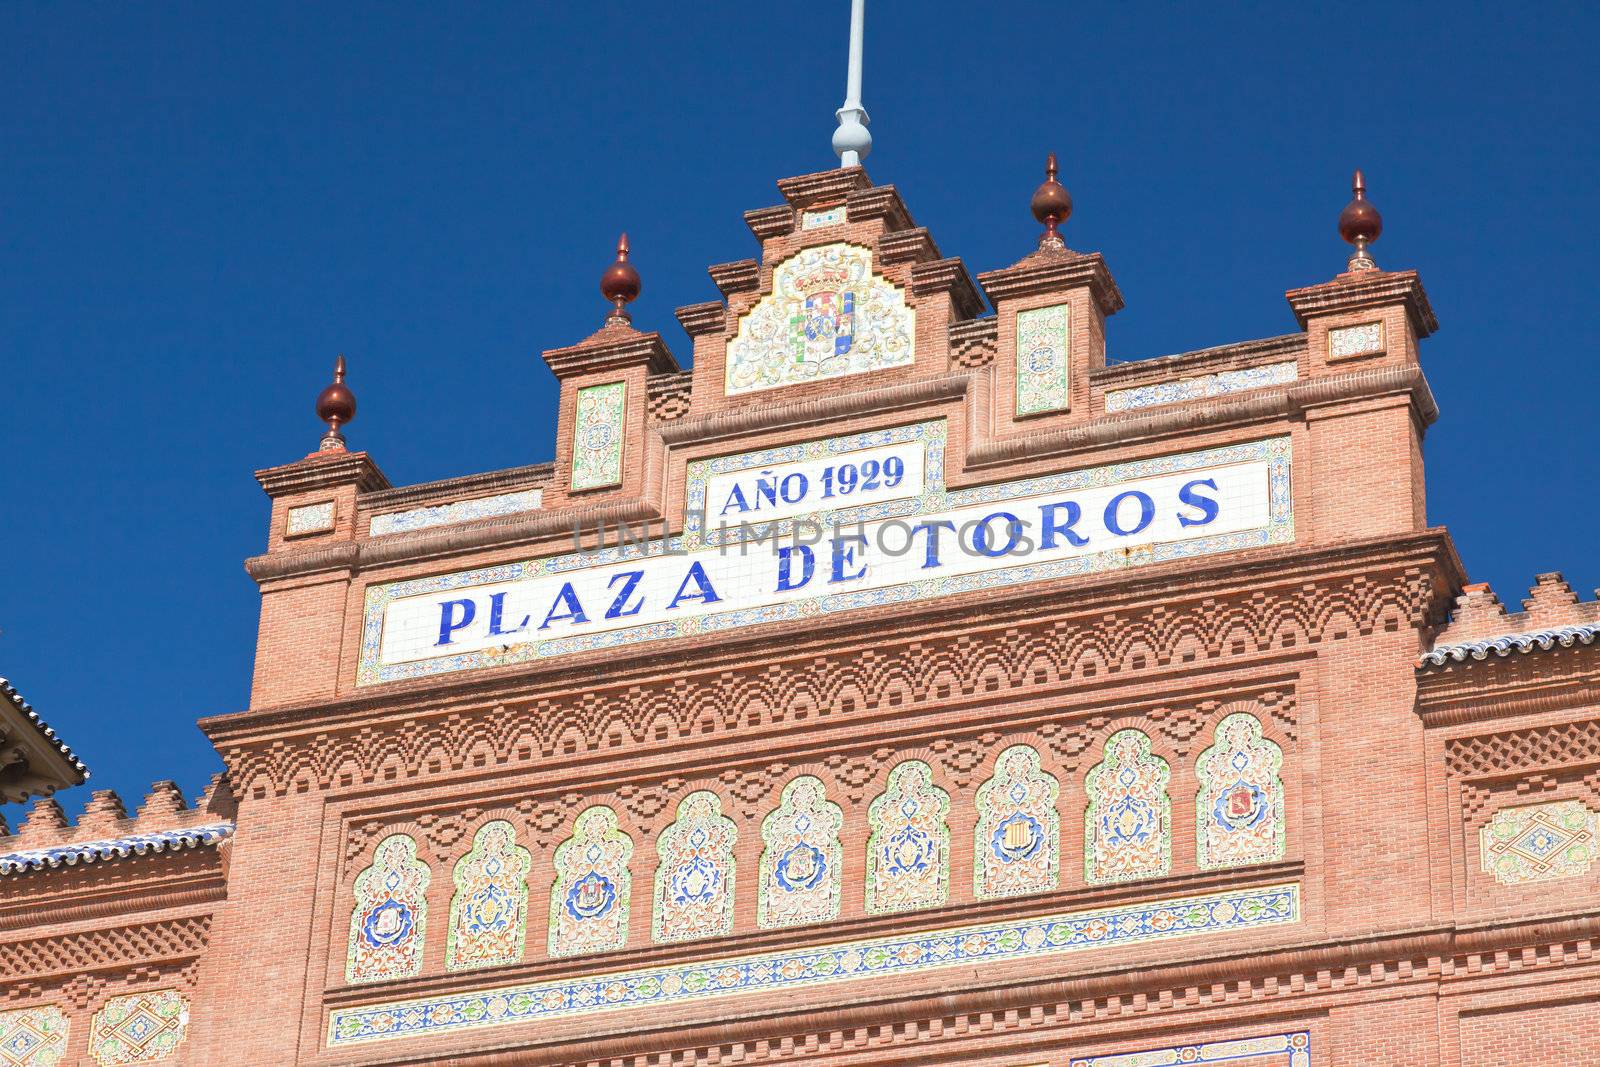 Famous bullfighting arena - Plaza de Toros in Madrid by gary718